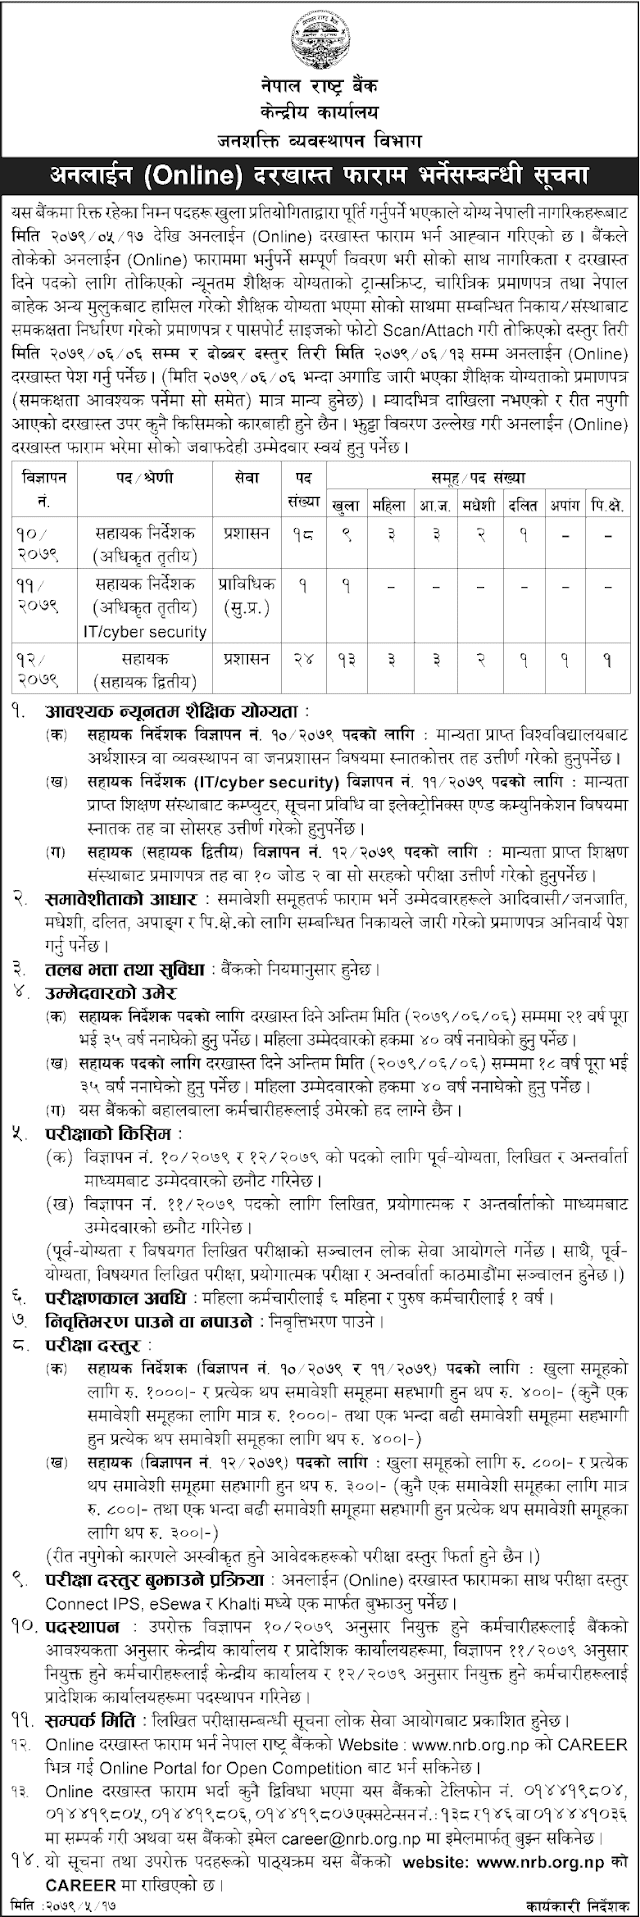 Nepal Rastra Bank (NRB) Vacancy 2079